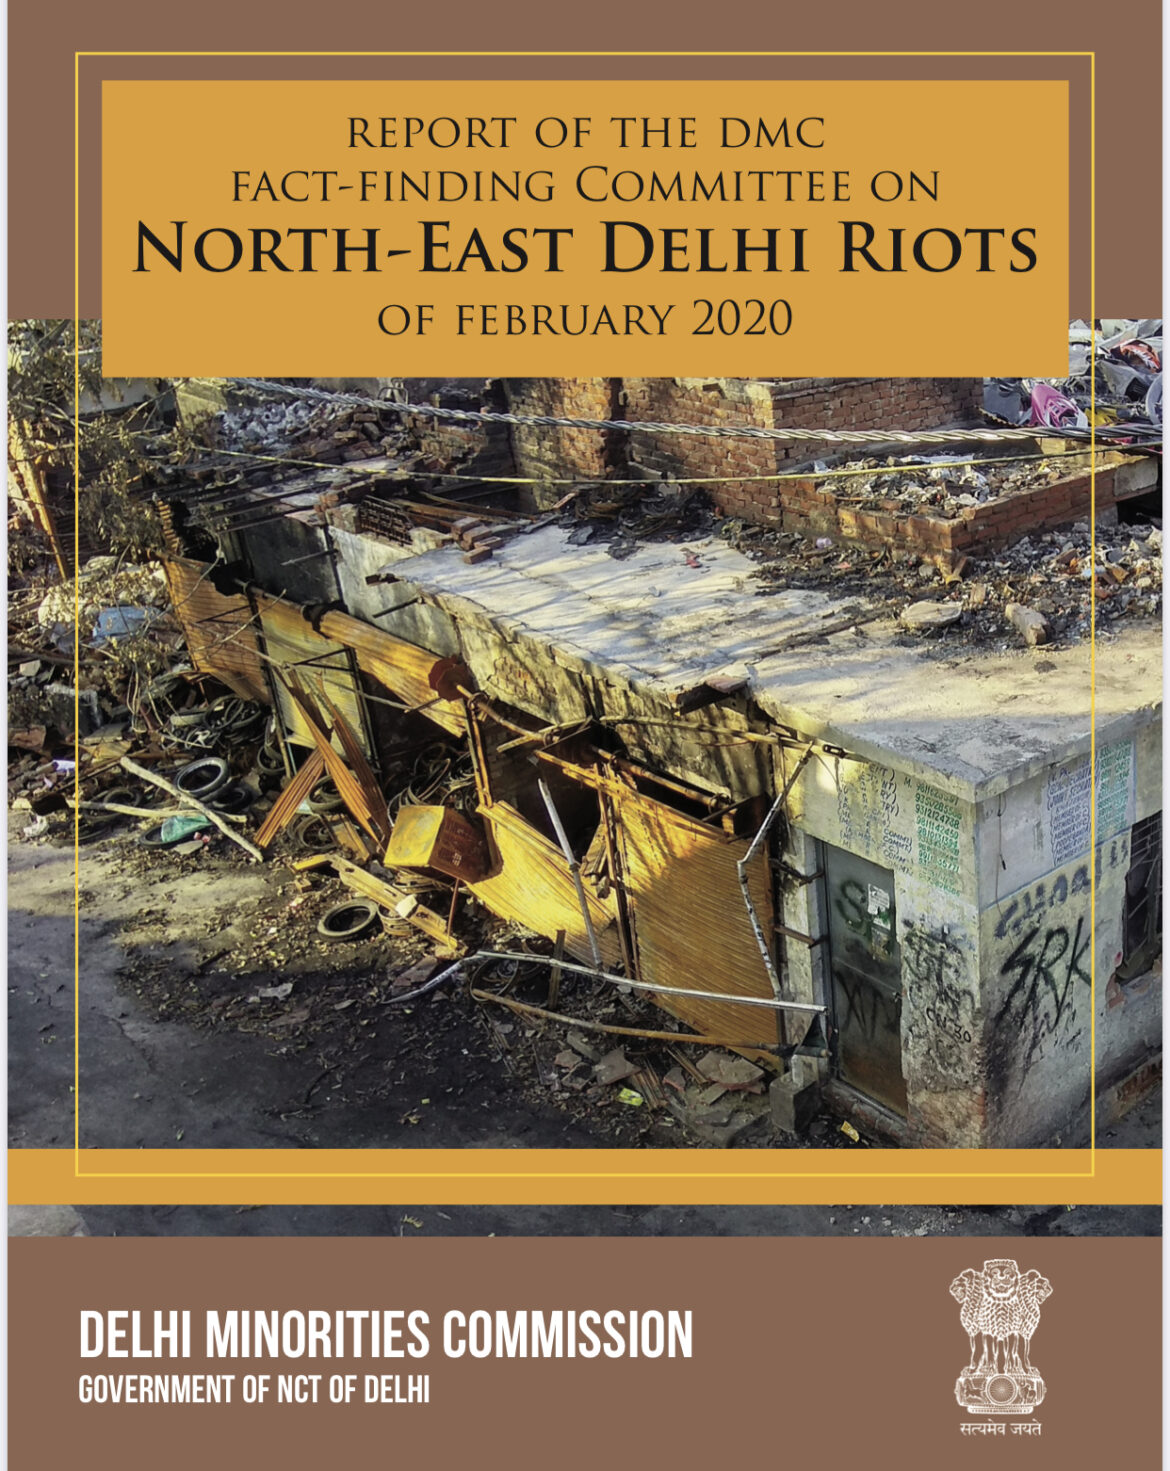 Report of the Delhi Minorities Commission on Delhi Riots